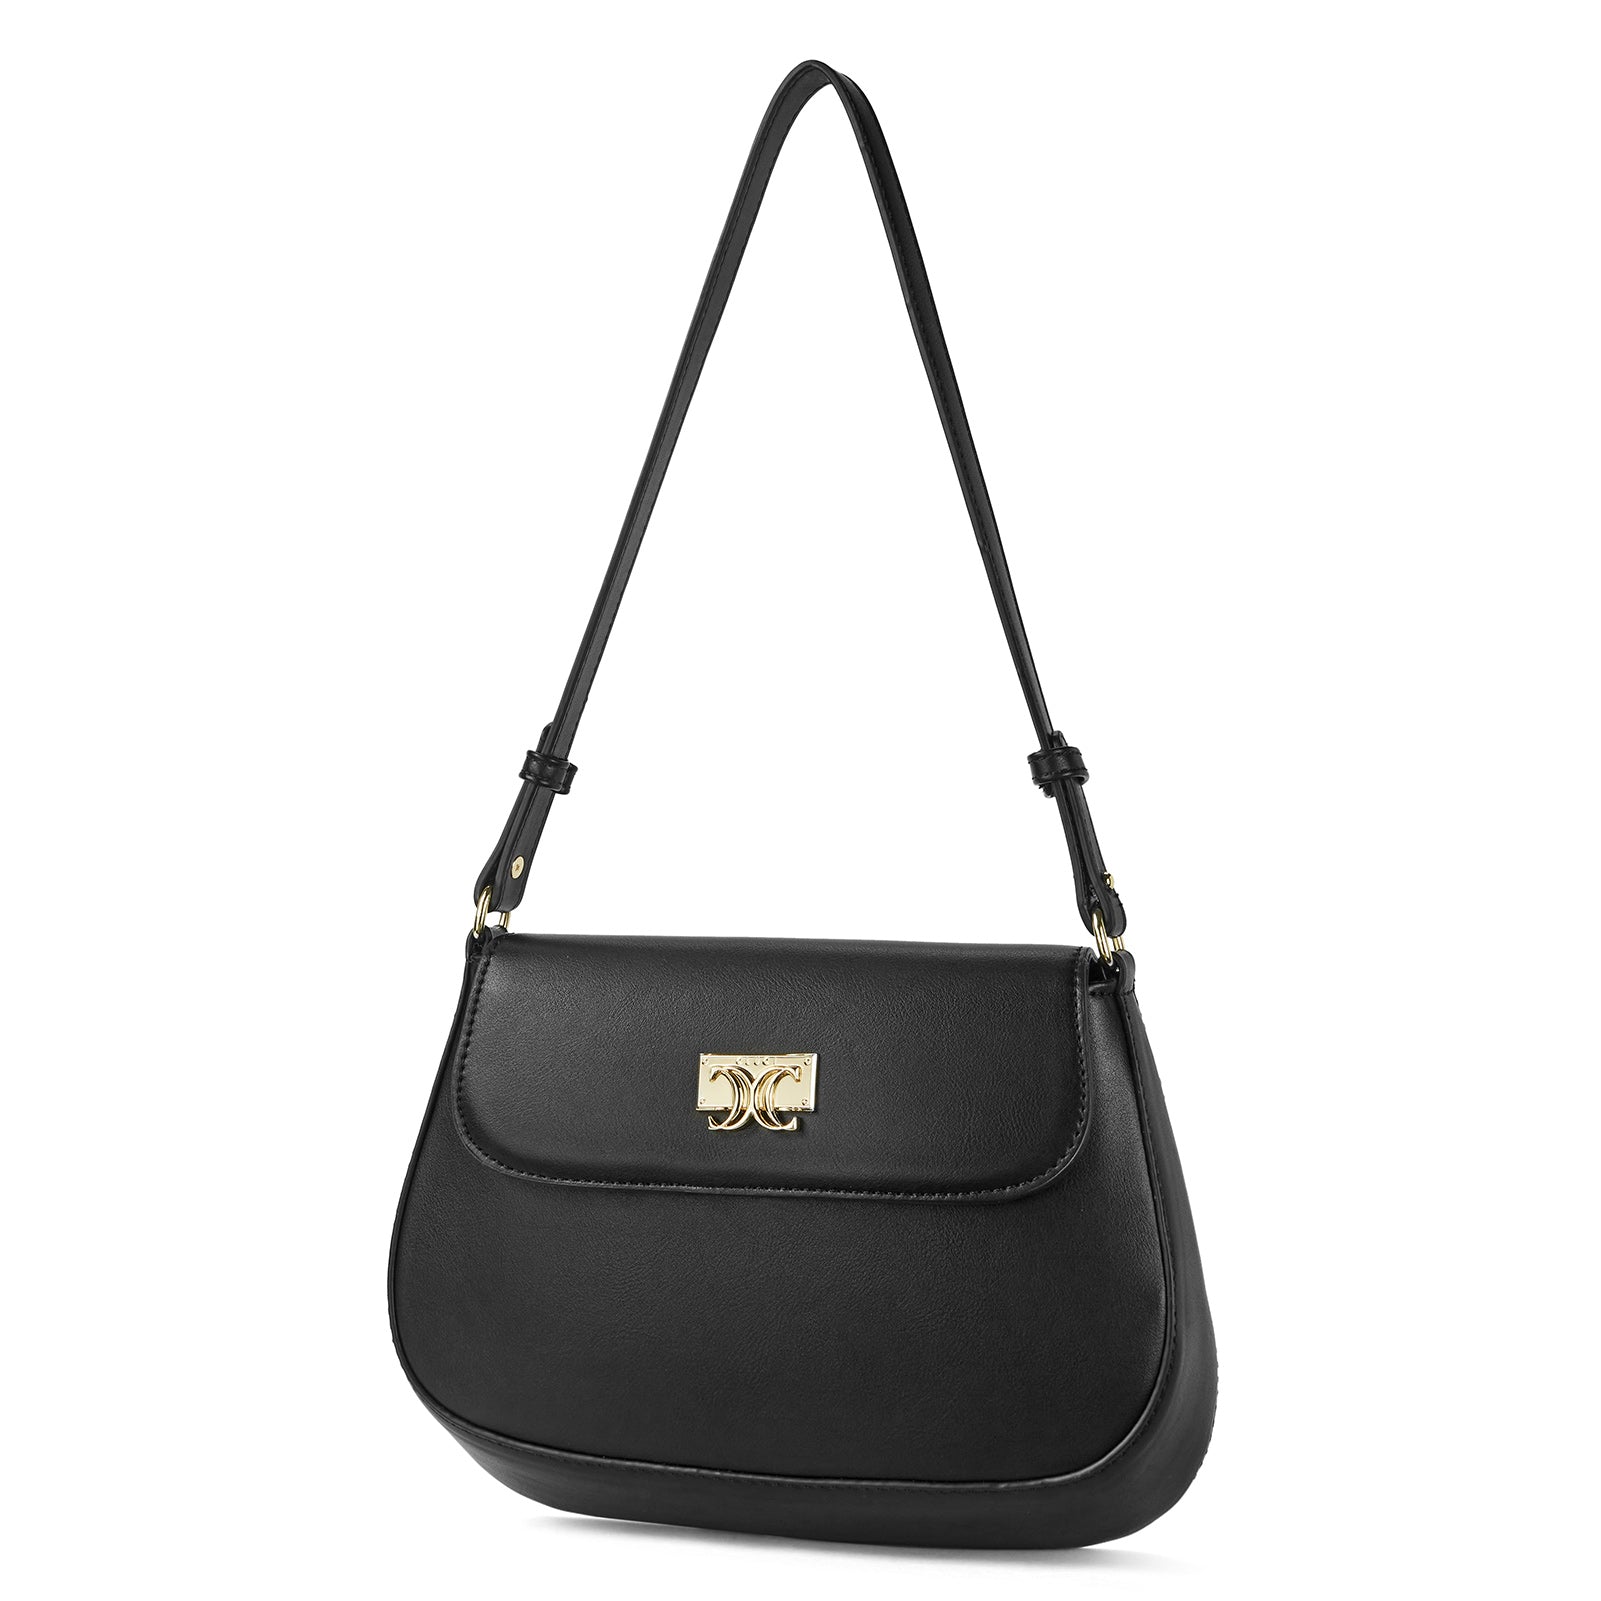 CLUCI Purses for women Small Shoulder Bag Cute Clutch Designer Tote Handbags Leather Crossbody Hobo purse